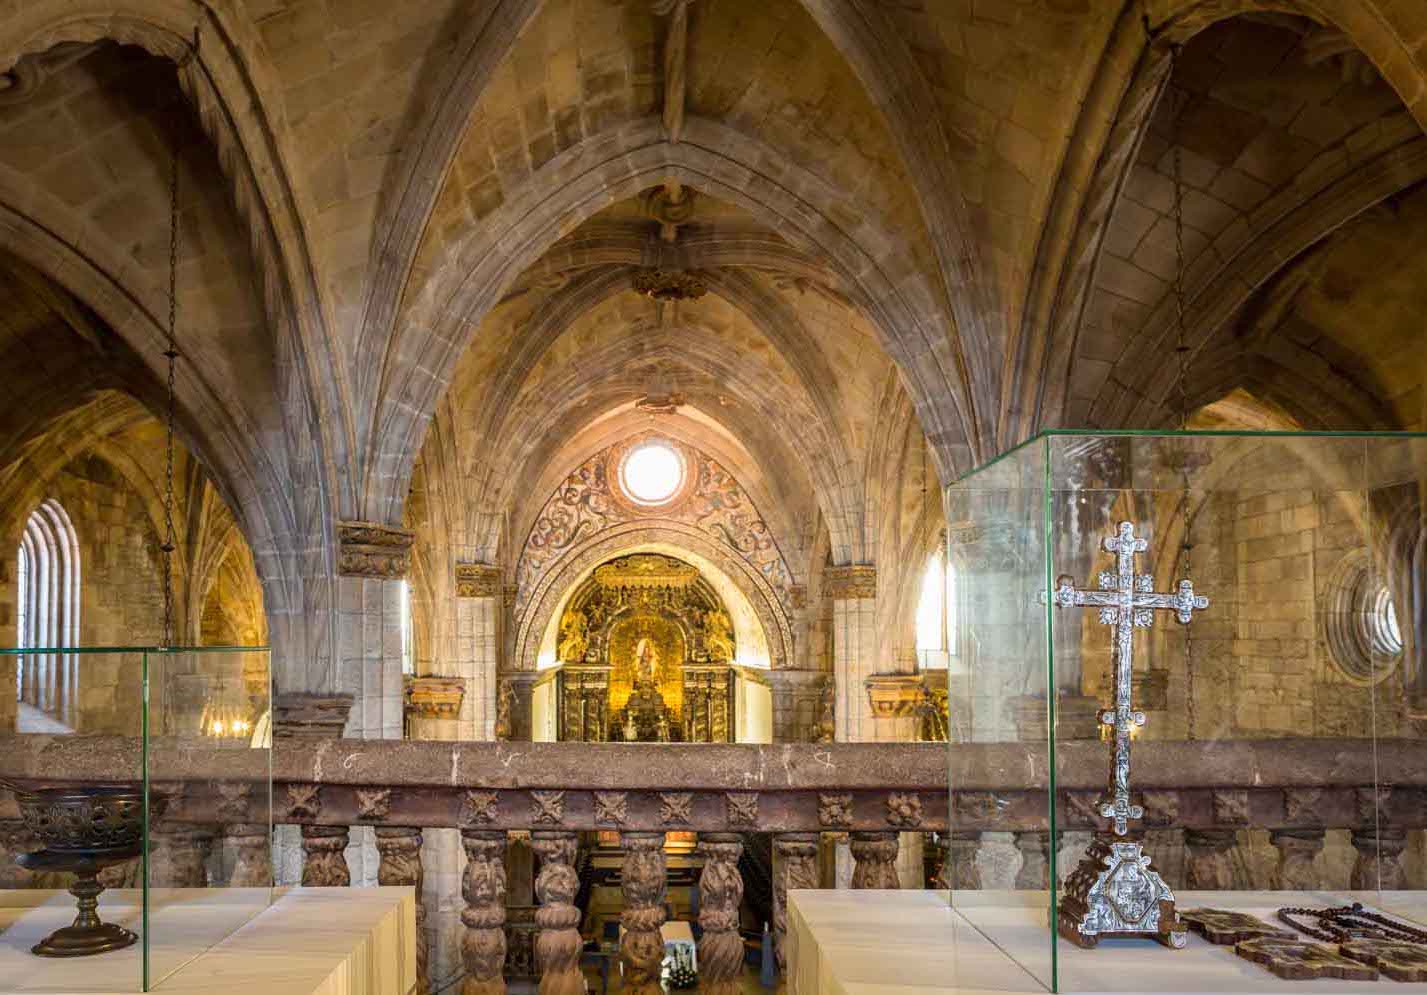 Catedral de Viseu e Museu “Tesouro da Catedral”